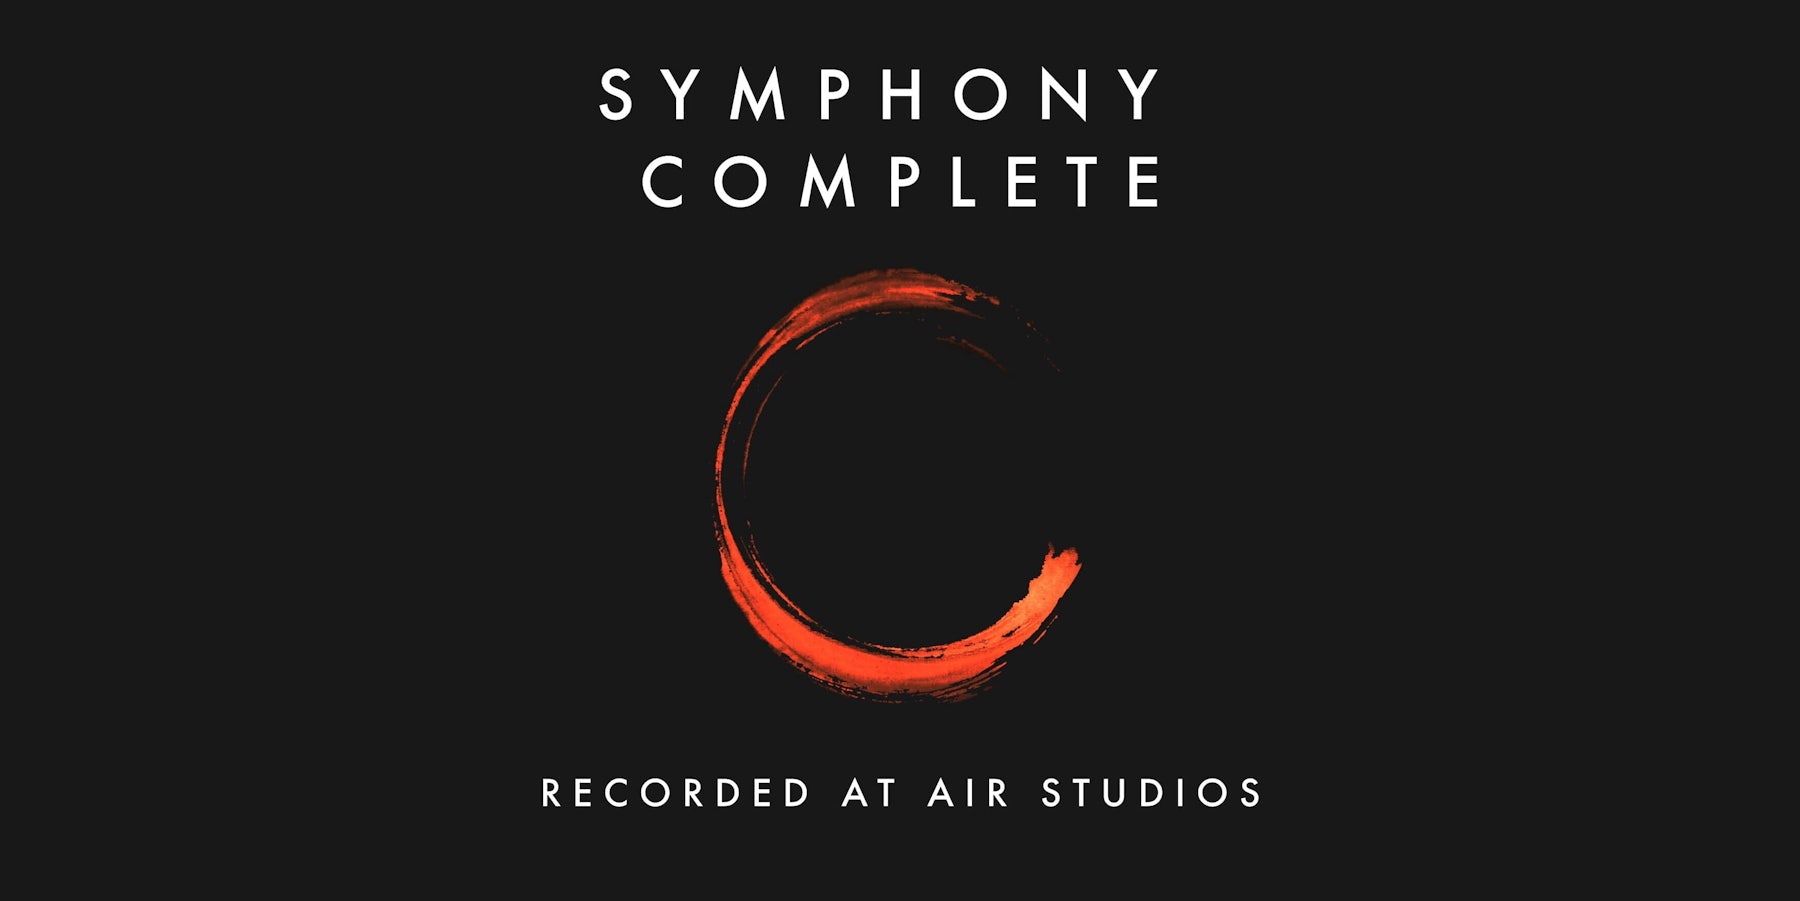 Symphony Complete Cinemascope Press